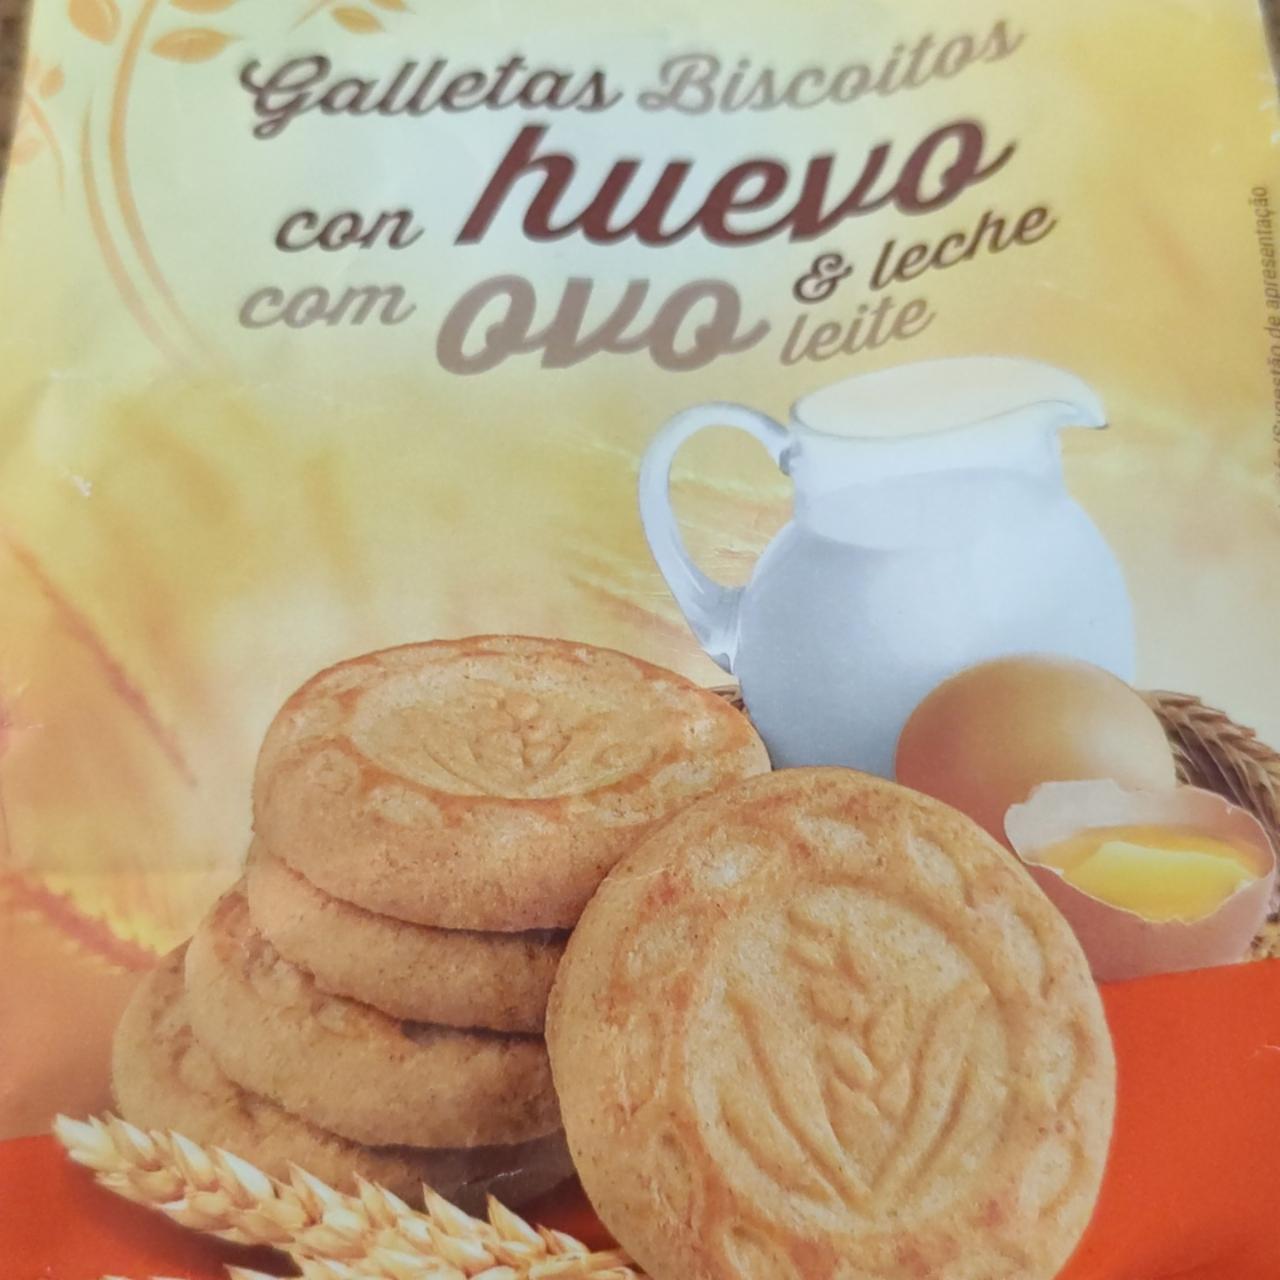 Fotografie - Galletas Biscoitos con huevo & leche Hacendado